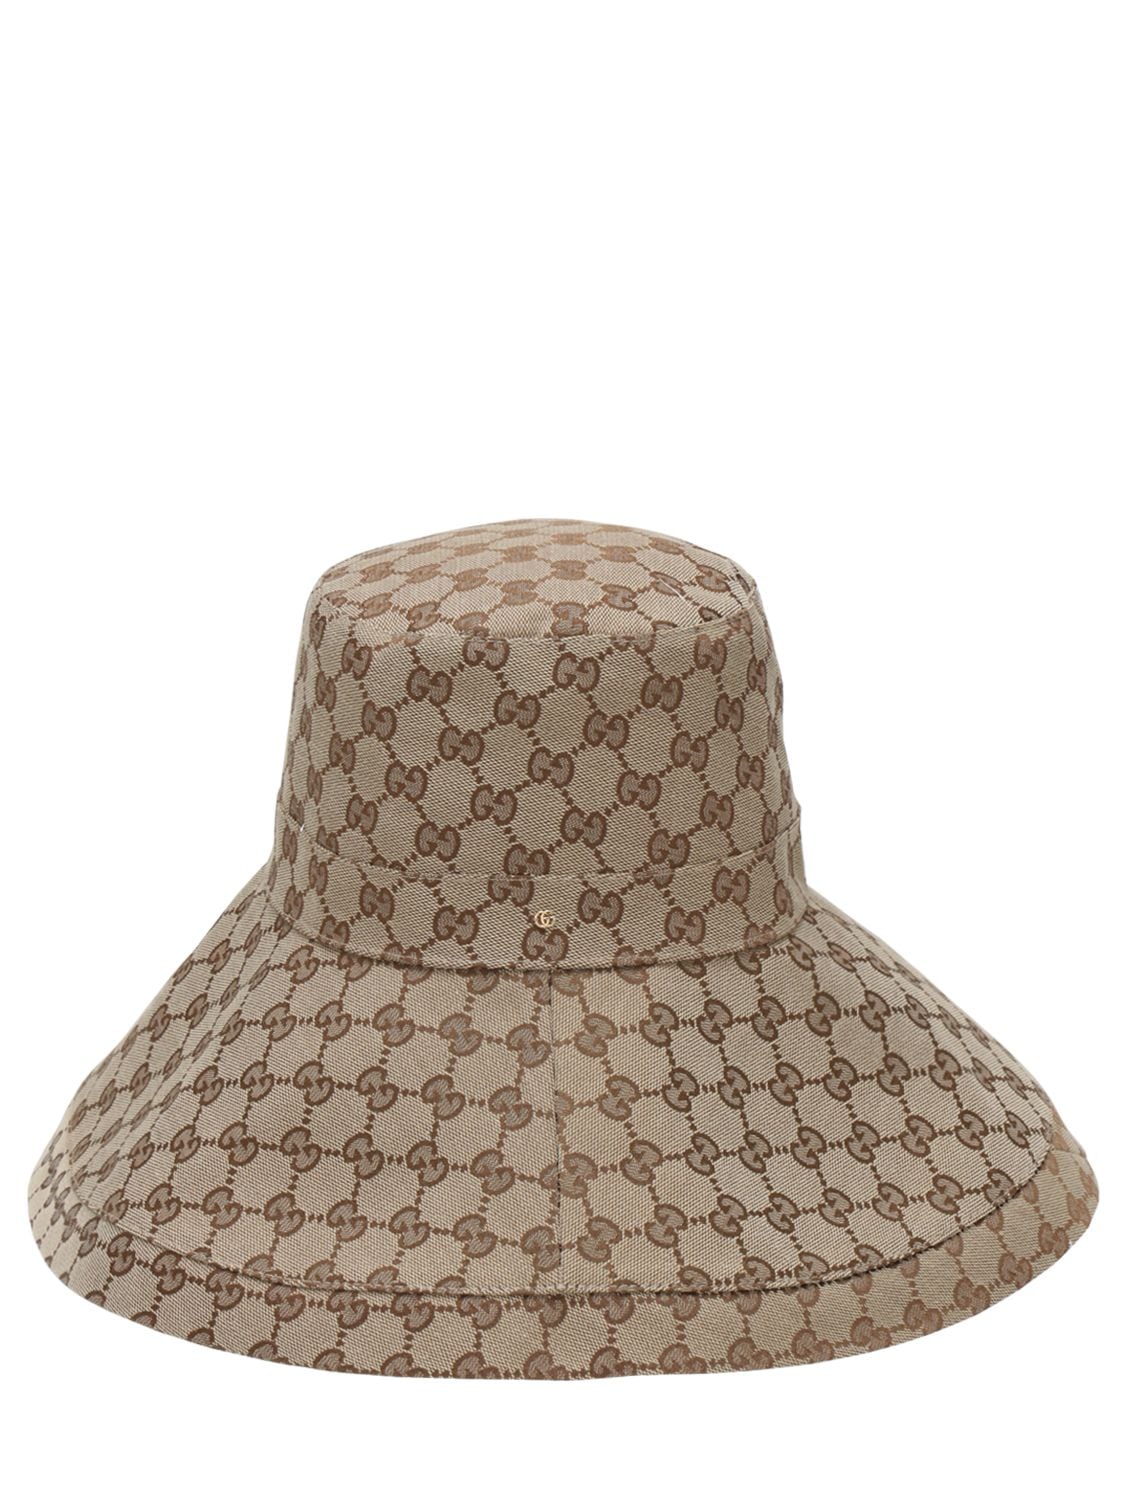 GUCCI California Original Gg Bucket Hat for Women